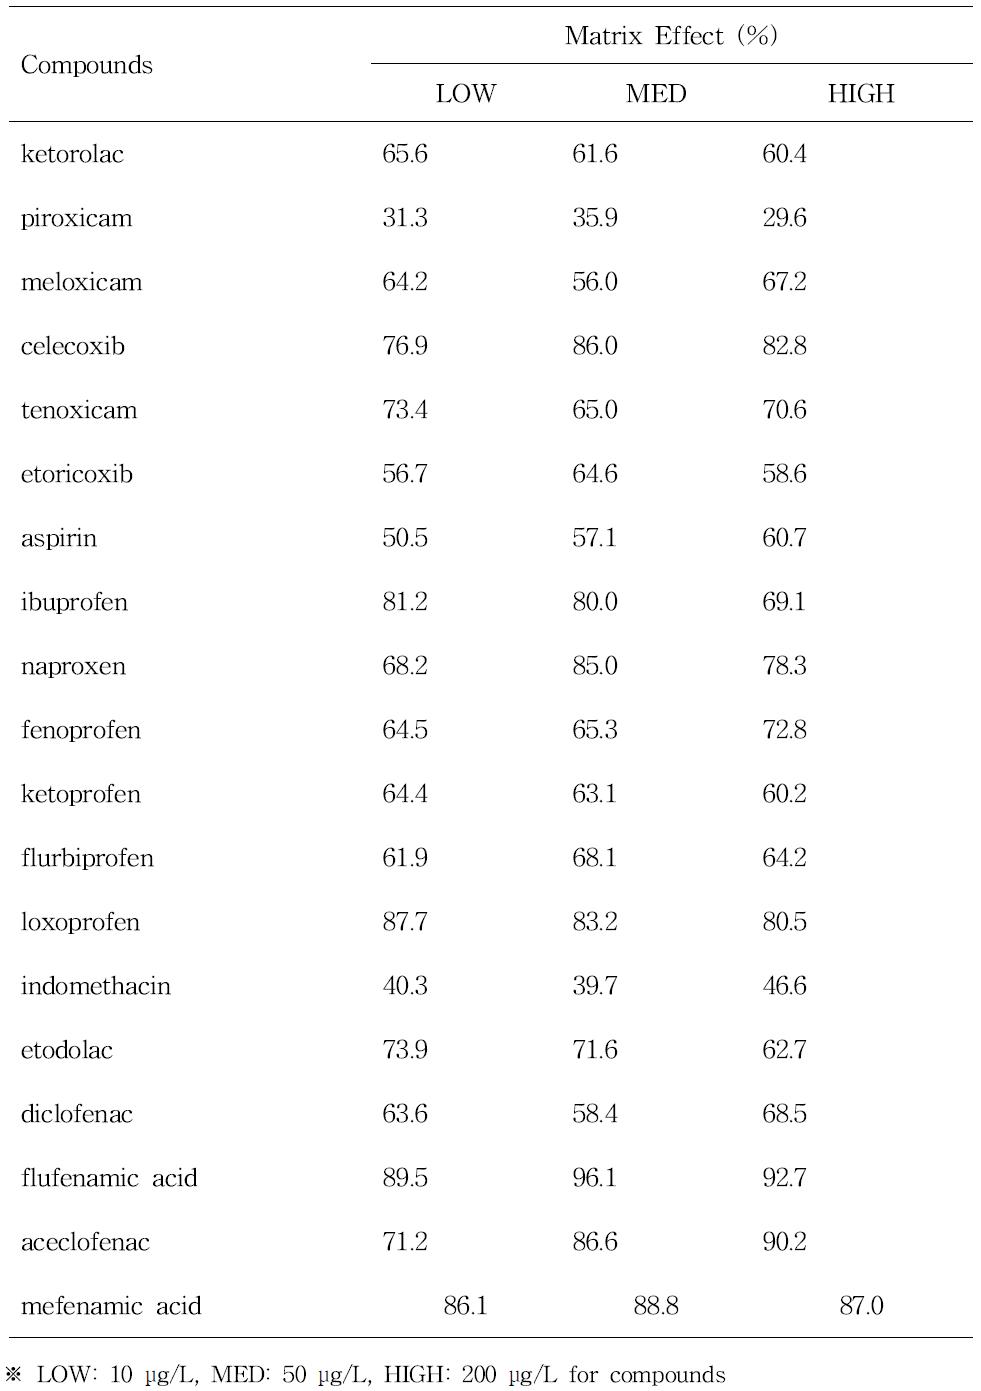 NSAIDs계 약물 19종의 생체시료 효과 (matrix effect) 측정값 (%)